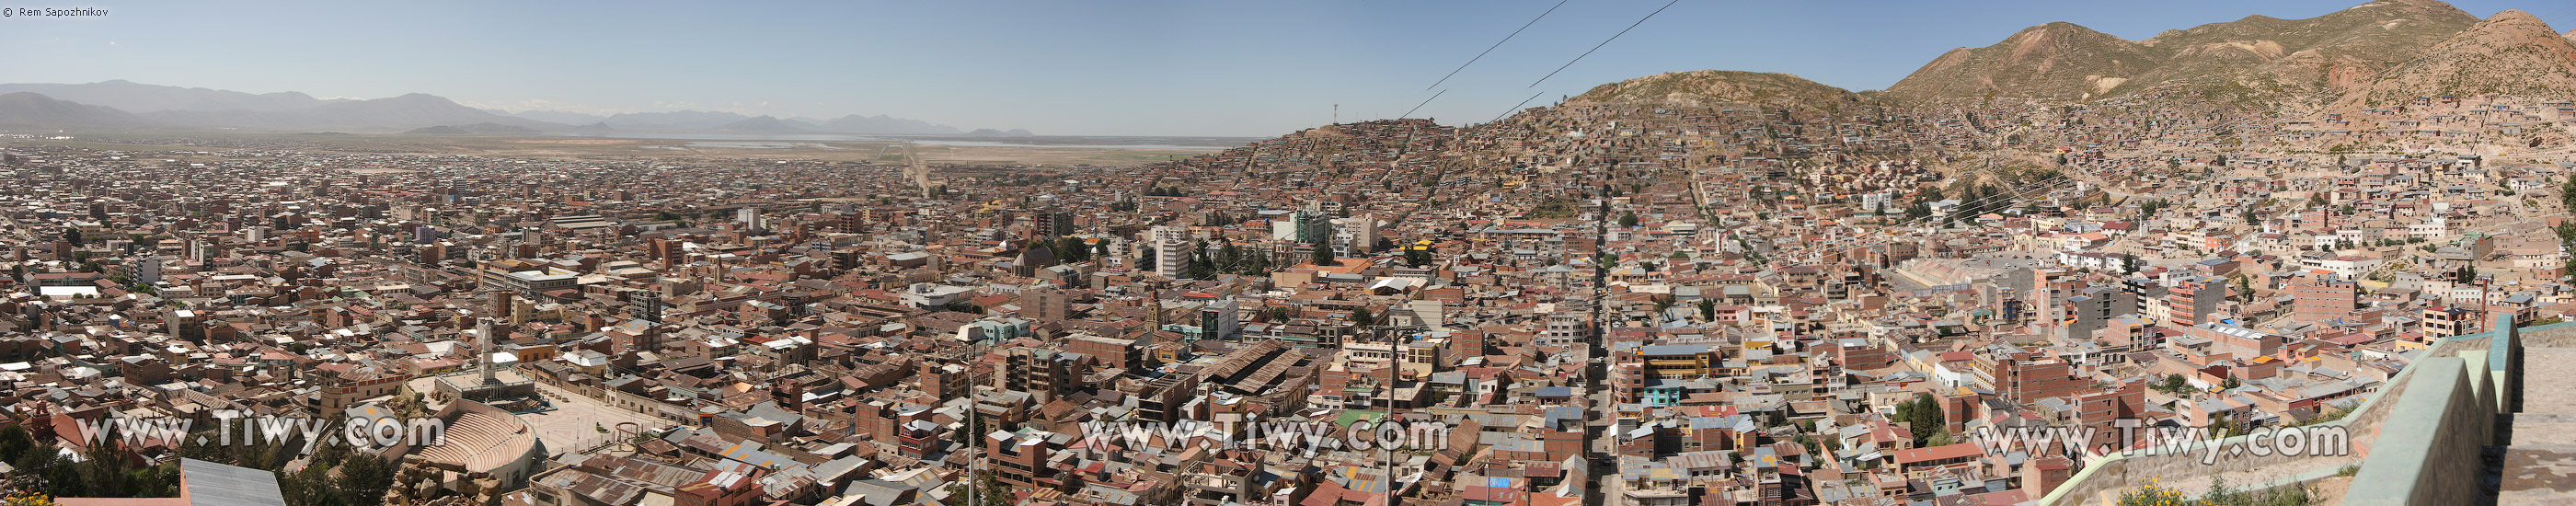 Оруро, Боливия